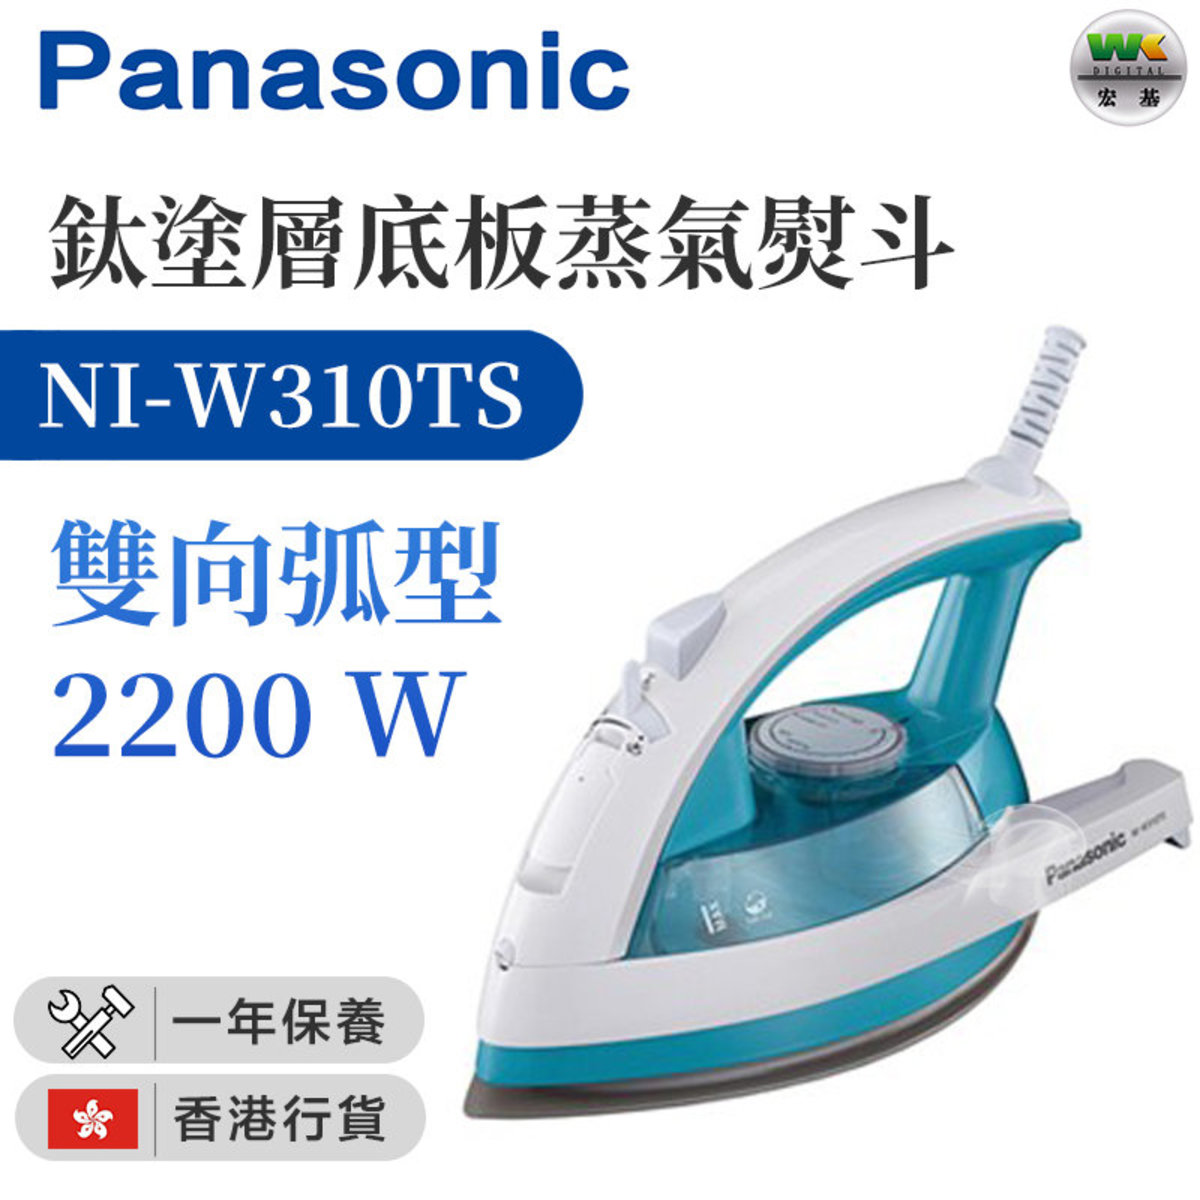 Panasonic NI-W310TS Steam Dry Iron, 220 to 240-volt